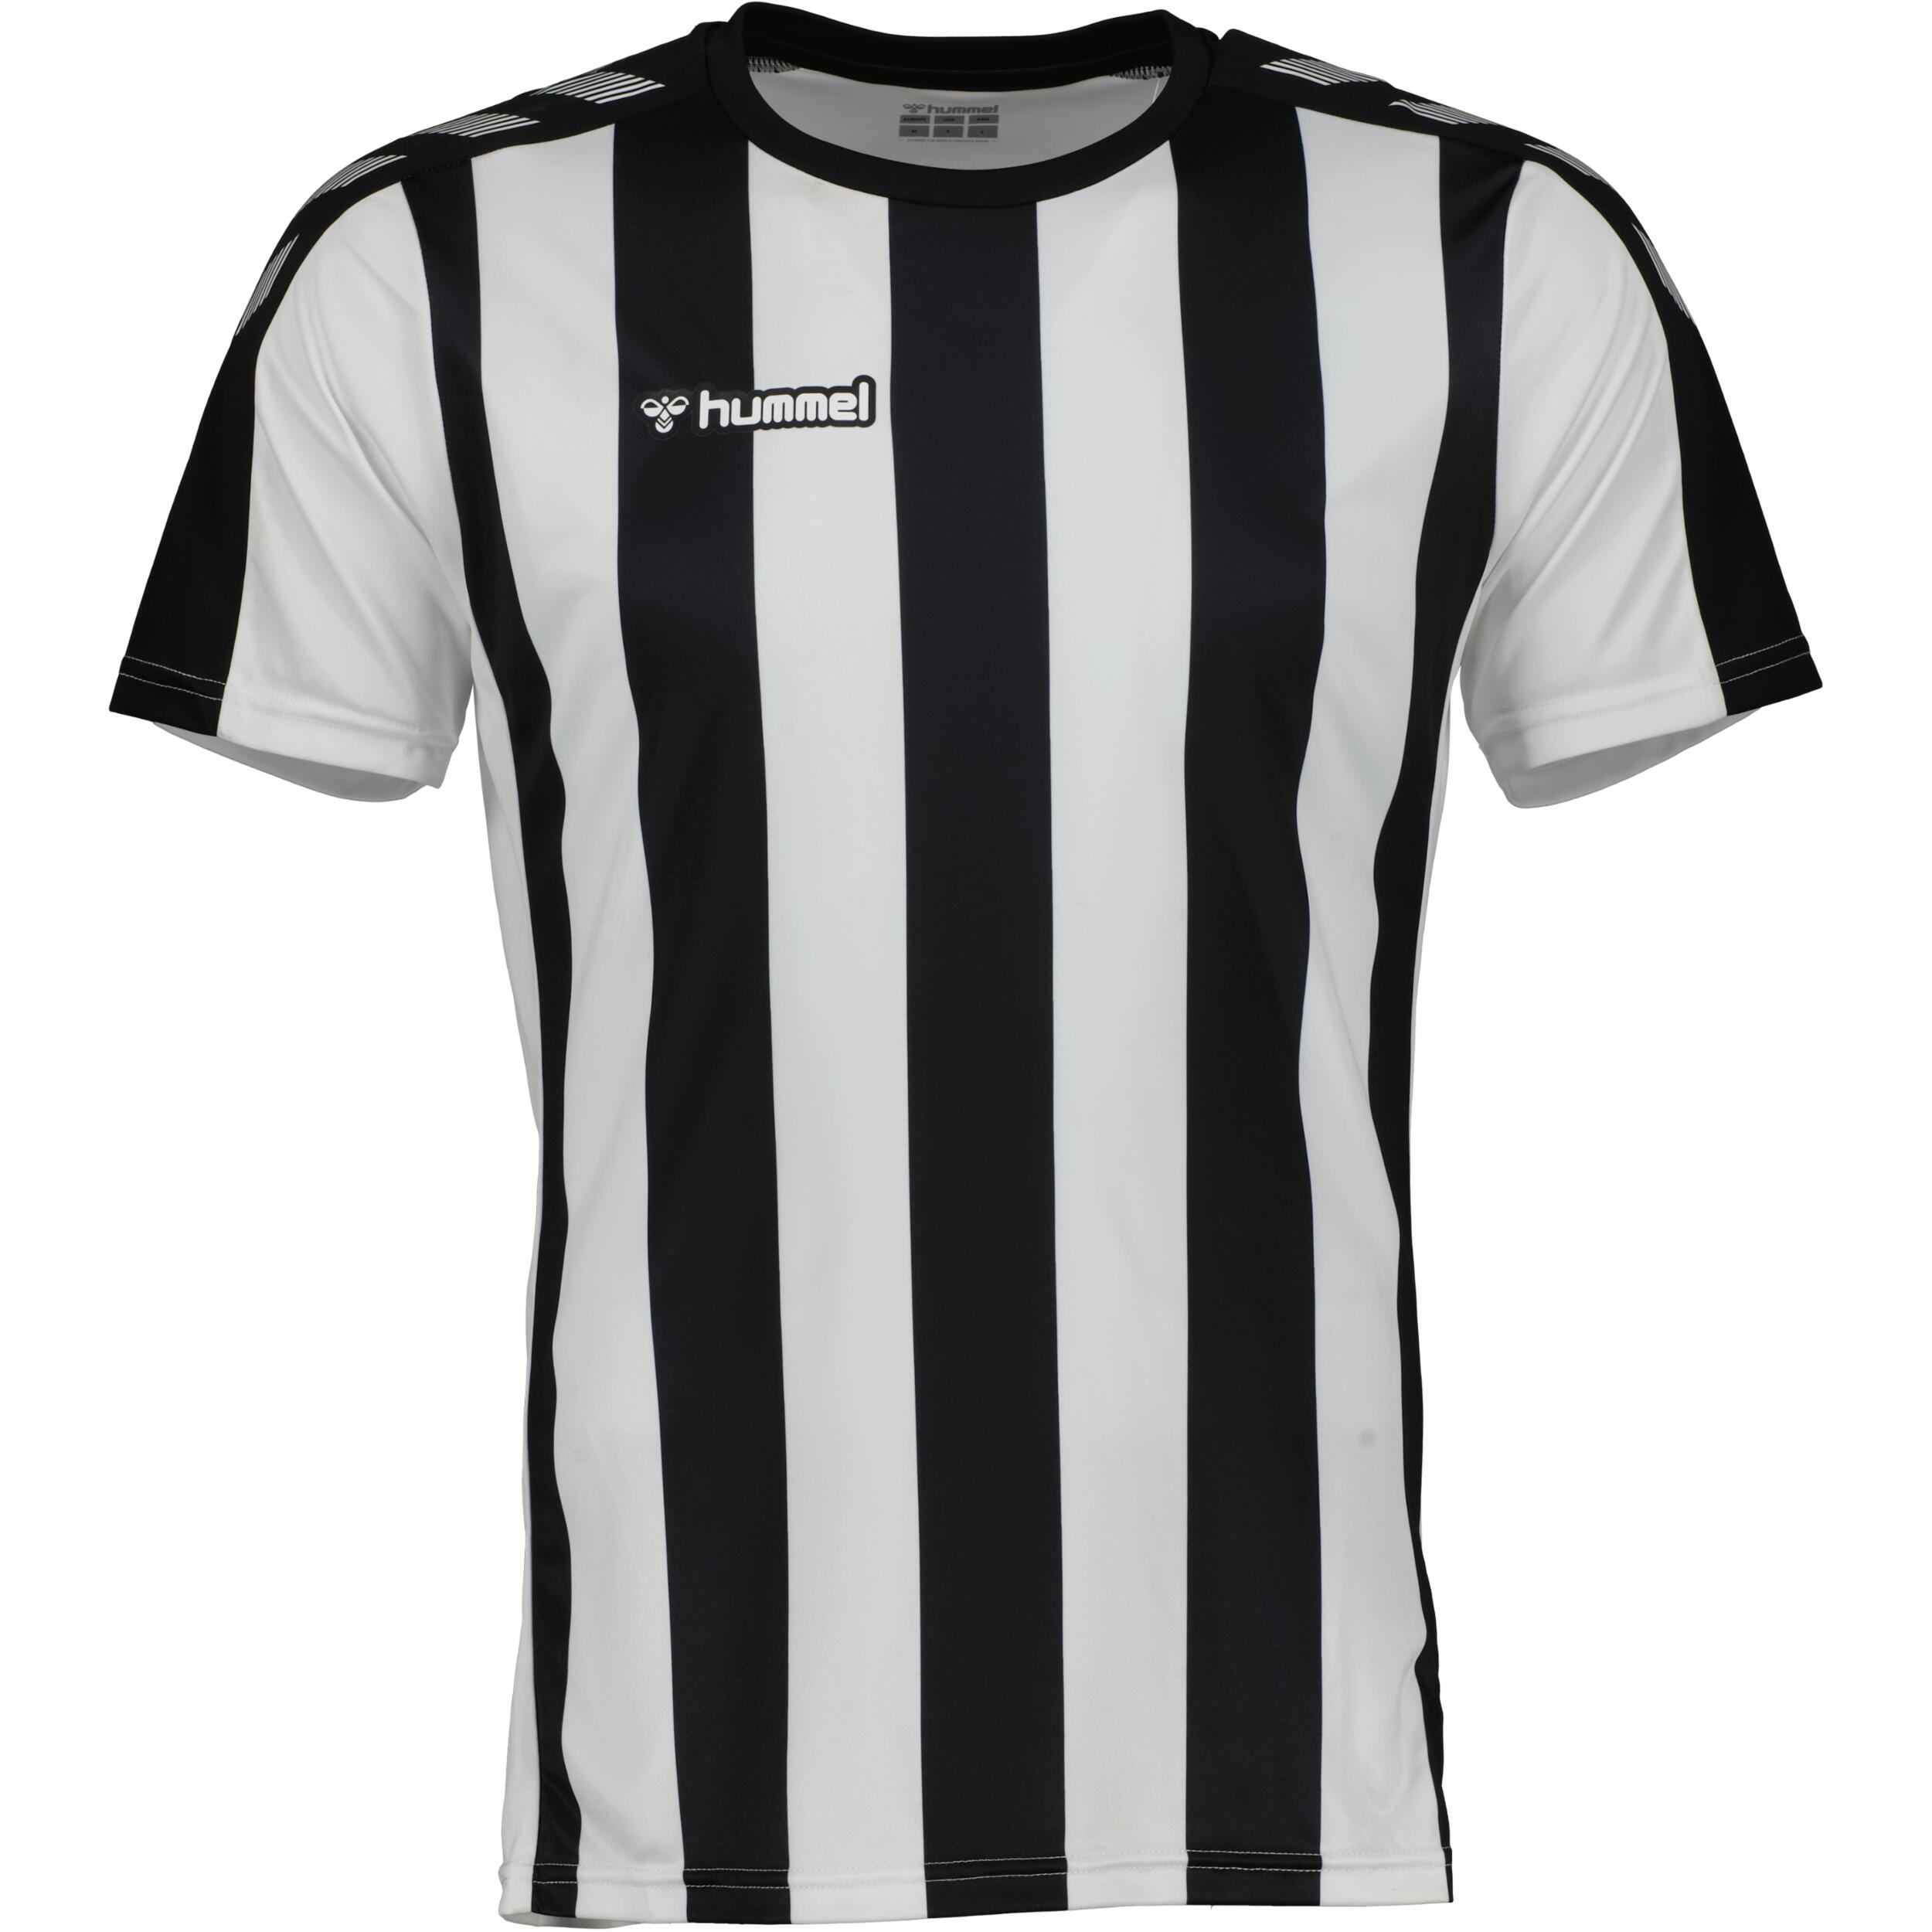 Stripe jersey for men, great for football,  in black/white 1/3